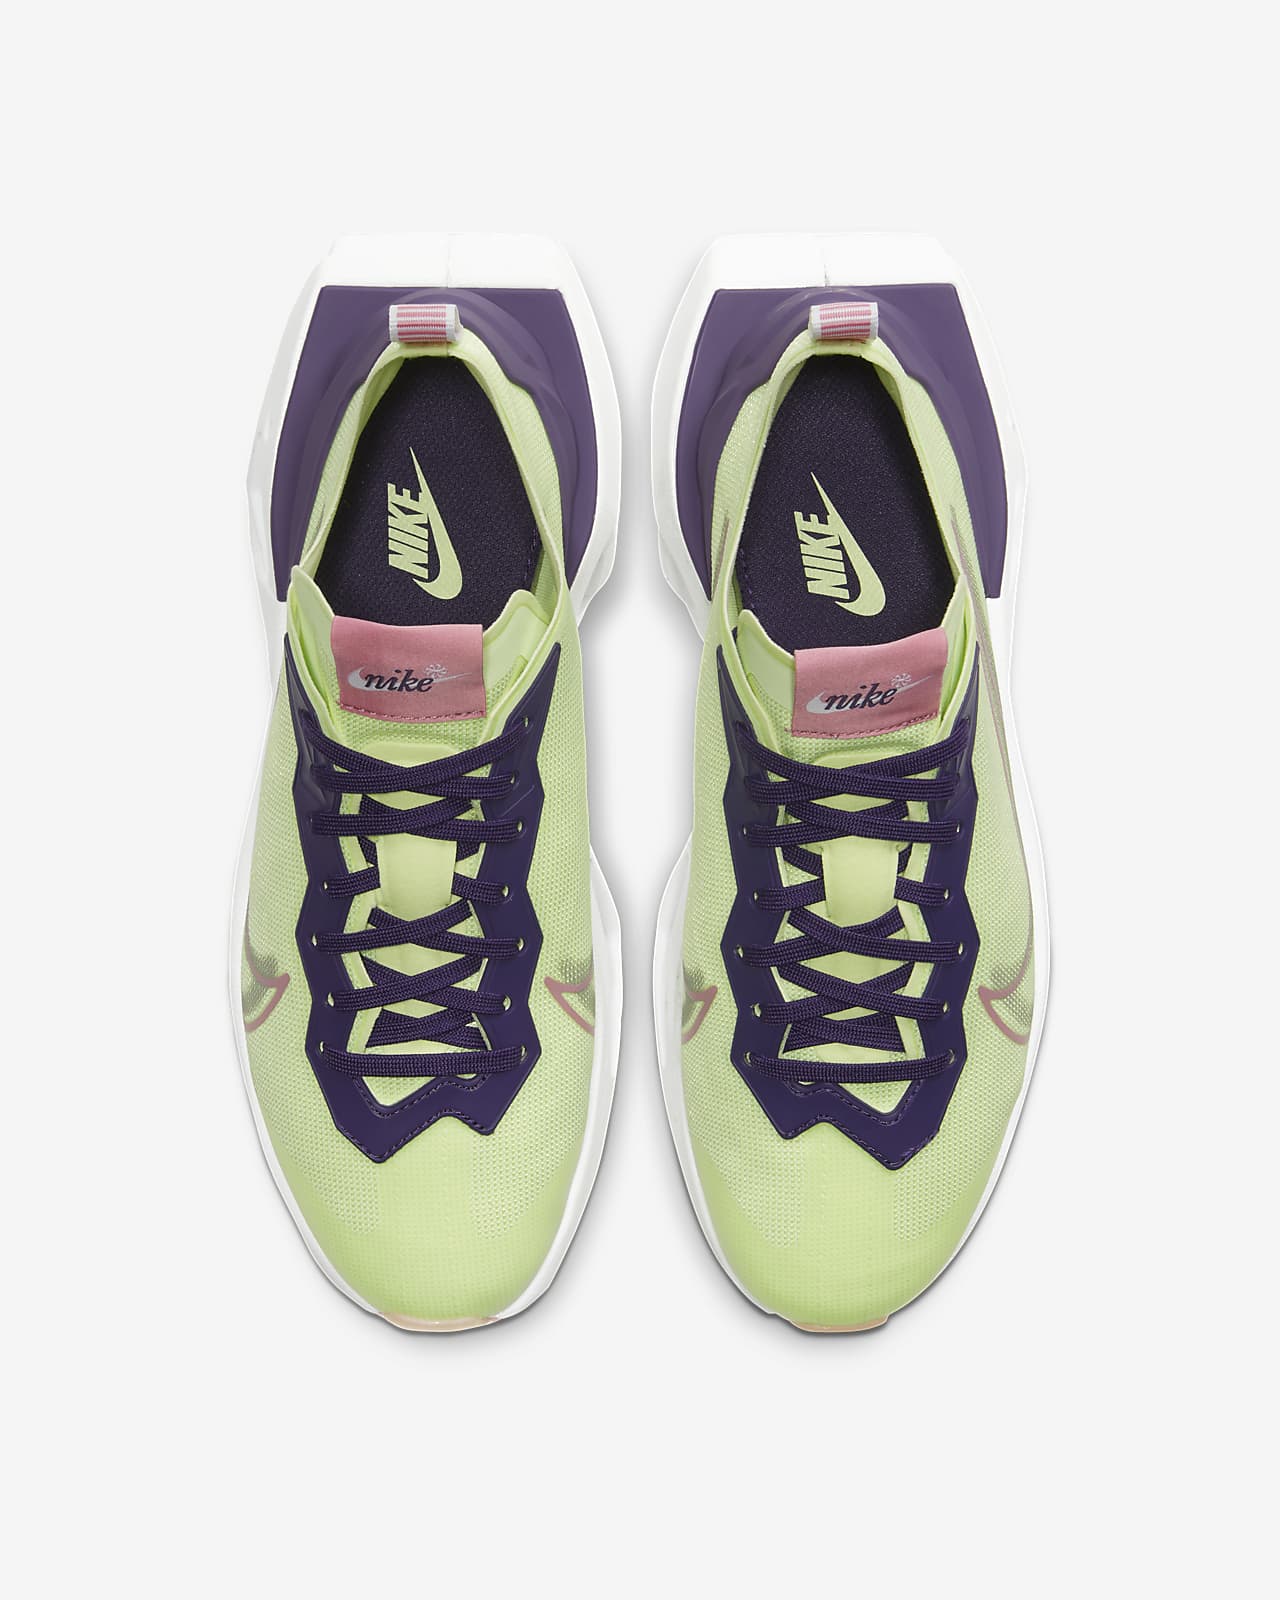 Nike ZoomX Vista Grind Women's Shoe